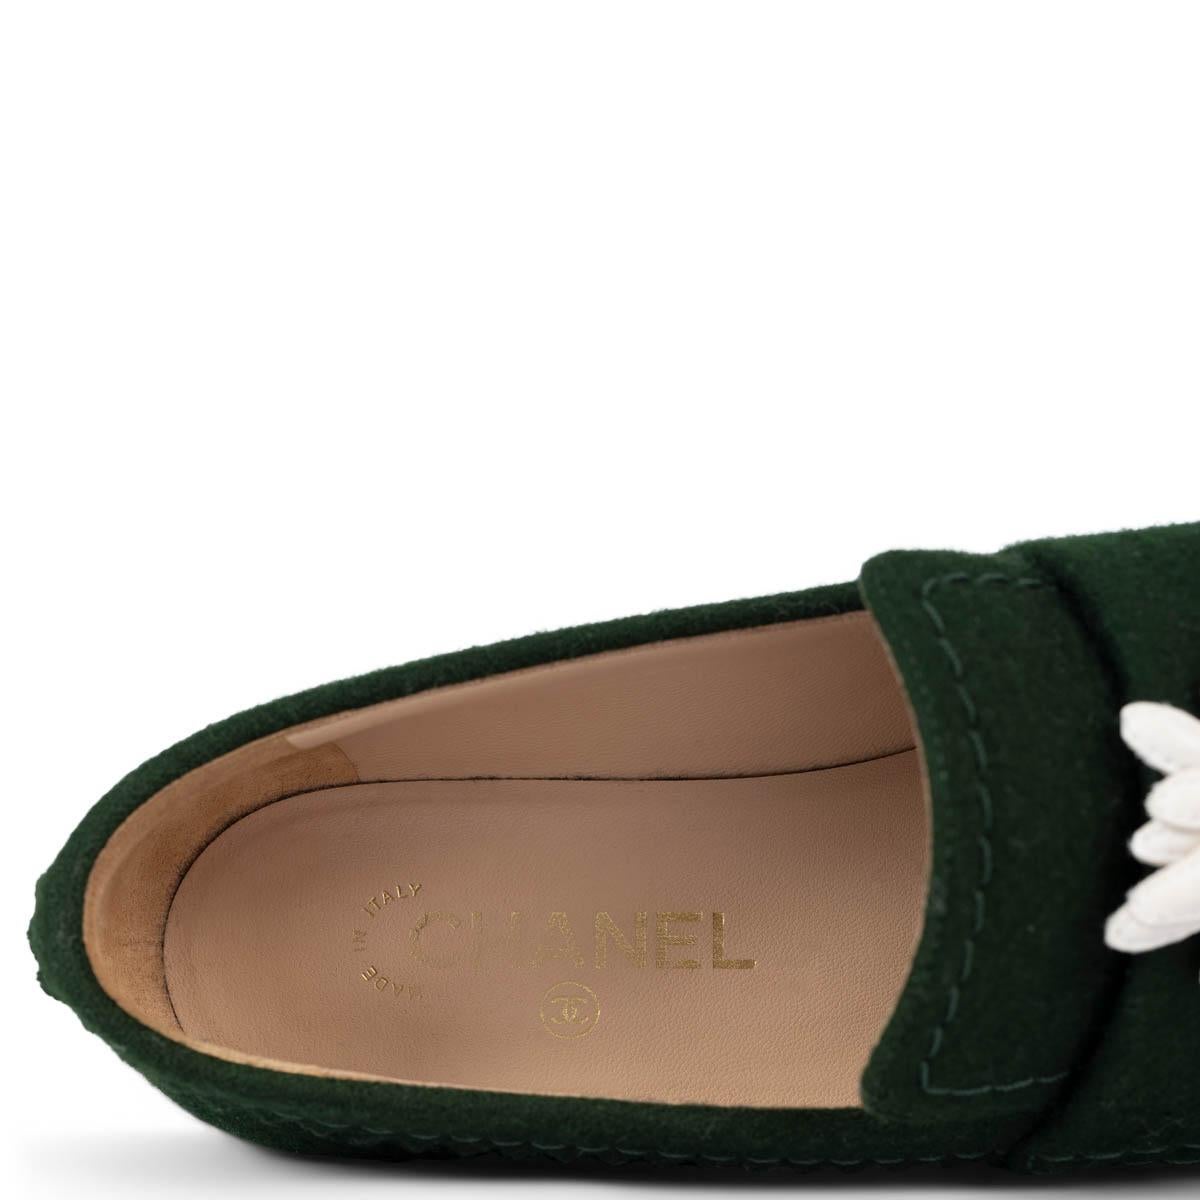 CHANEL dark green felt 2015 15A SALZBURG Loafers Flats Shoes 39 fit 38.5 5